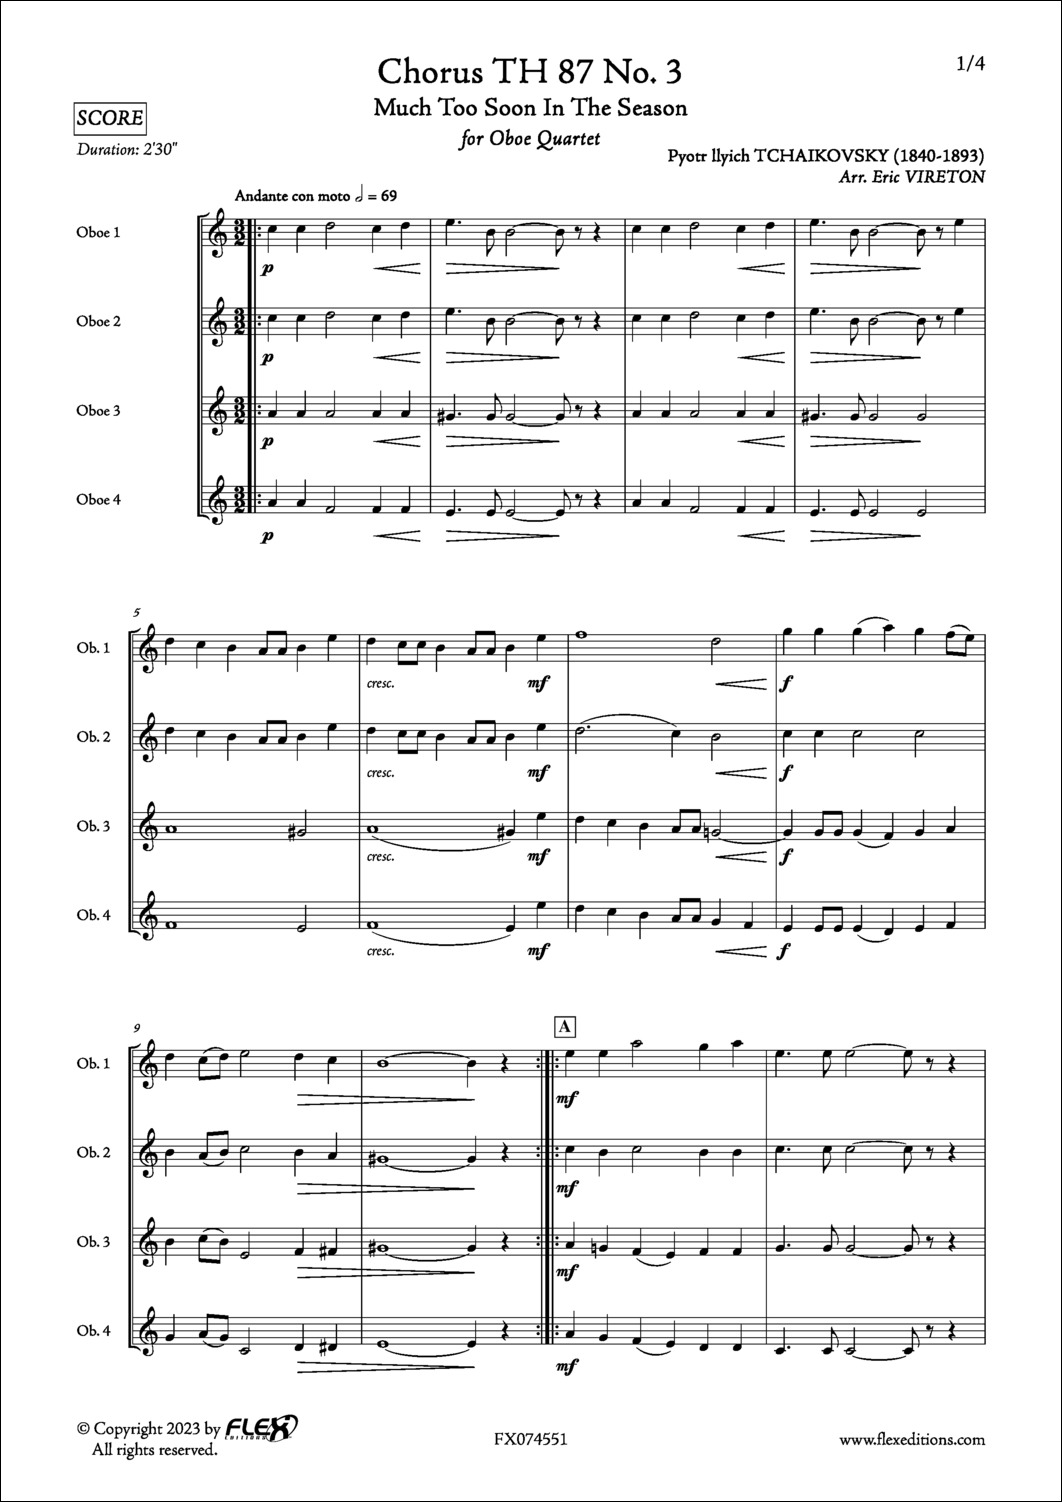 Chorus TH 87 No. 3 - P. I. TCHAIKOVSKY - <font color=#666666>Oboe Quartet</font>